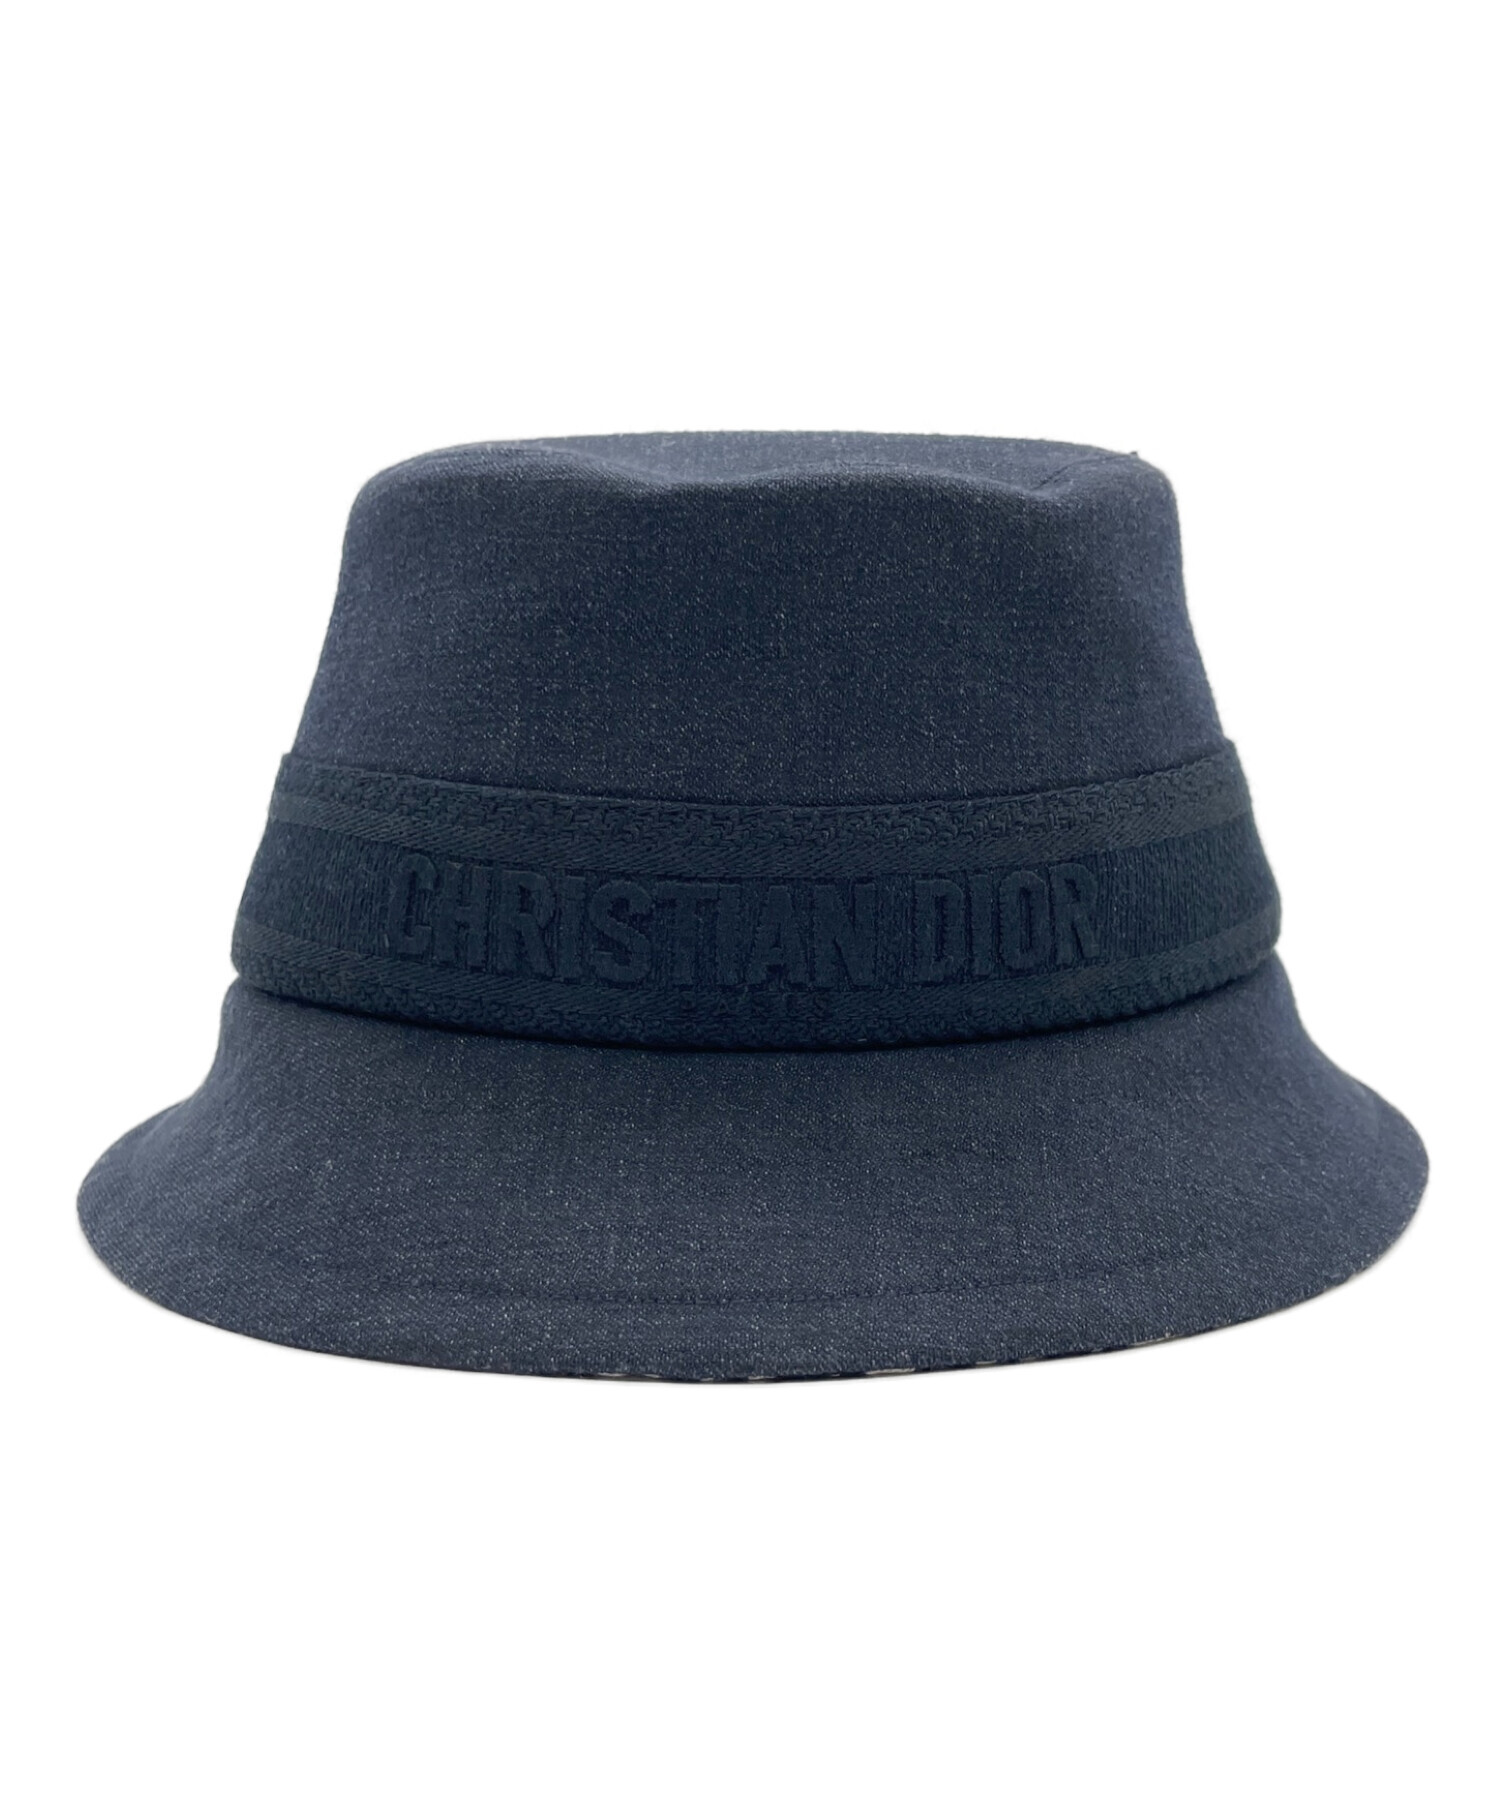 Christian Dior (クリスチャン ディオール) デニム ボブ ハット オブリーク ネイビー サイズ:57